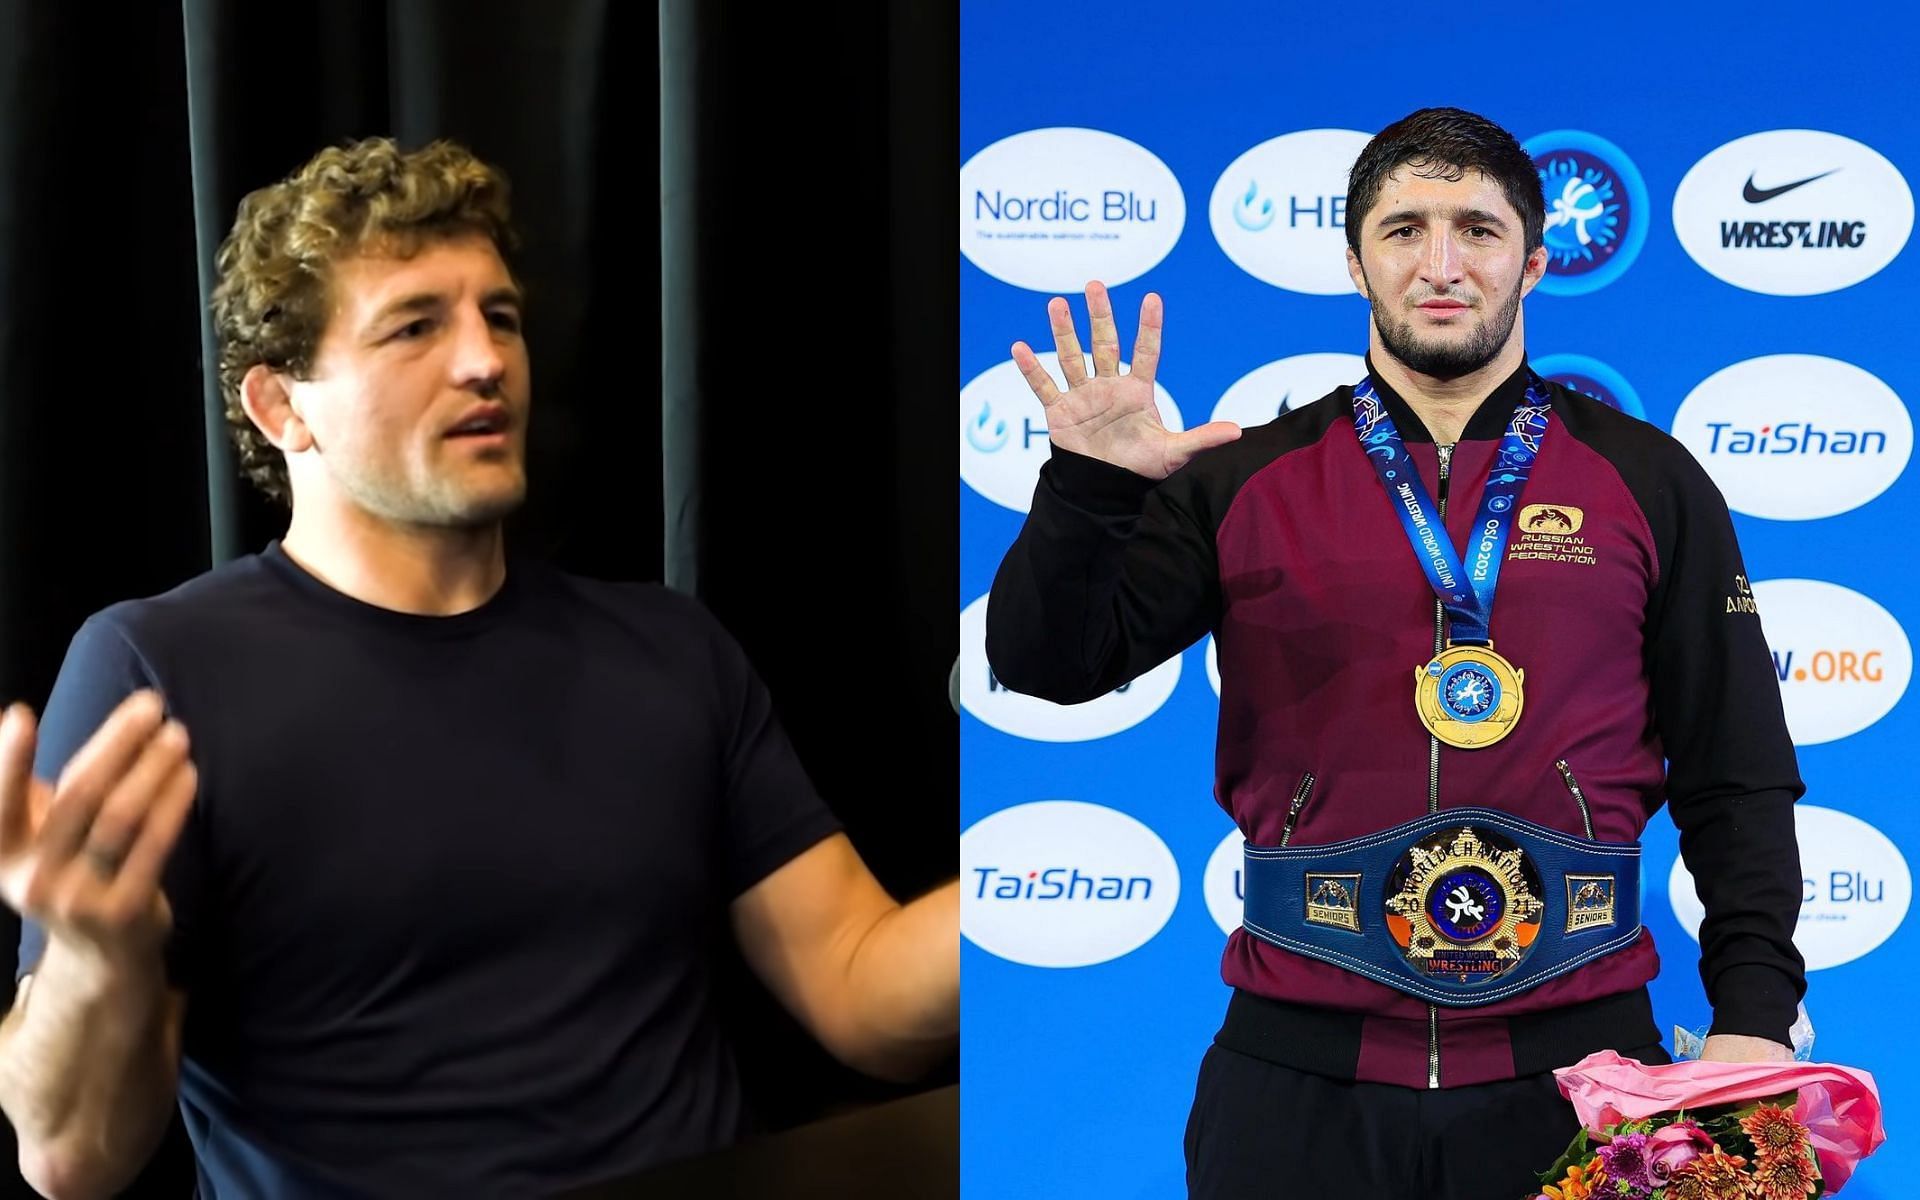 Ben Askren (left) image via Youtube/lexclips; Russian wrestler Abdulrashid Sadulaev (right) image via Instagram/sadulaev_abdulrashid